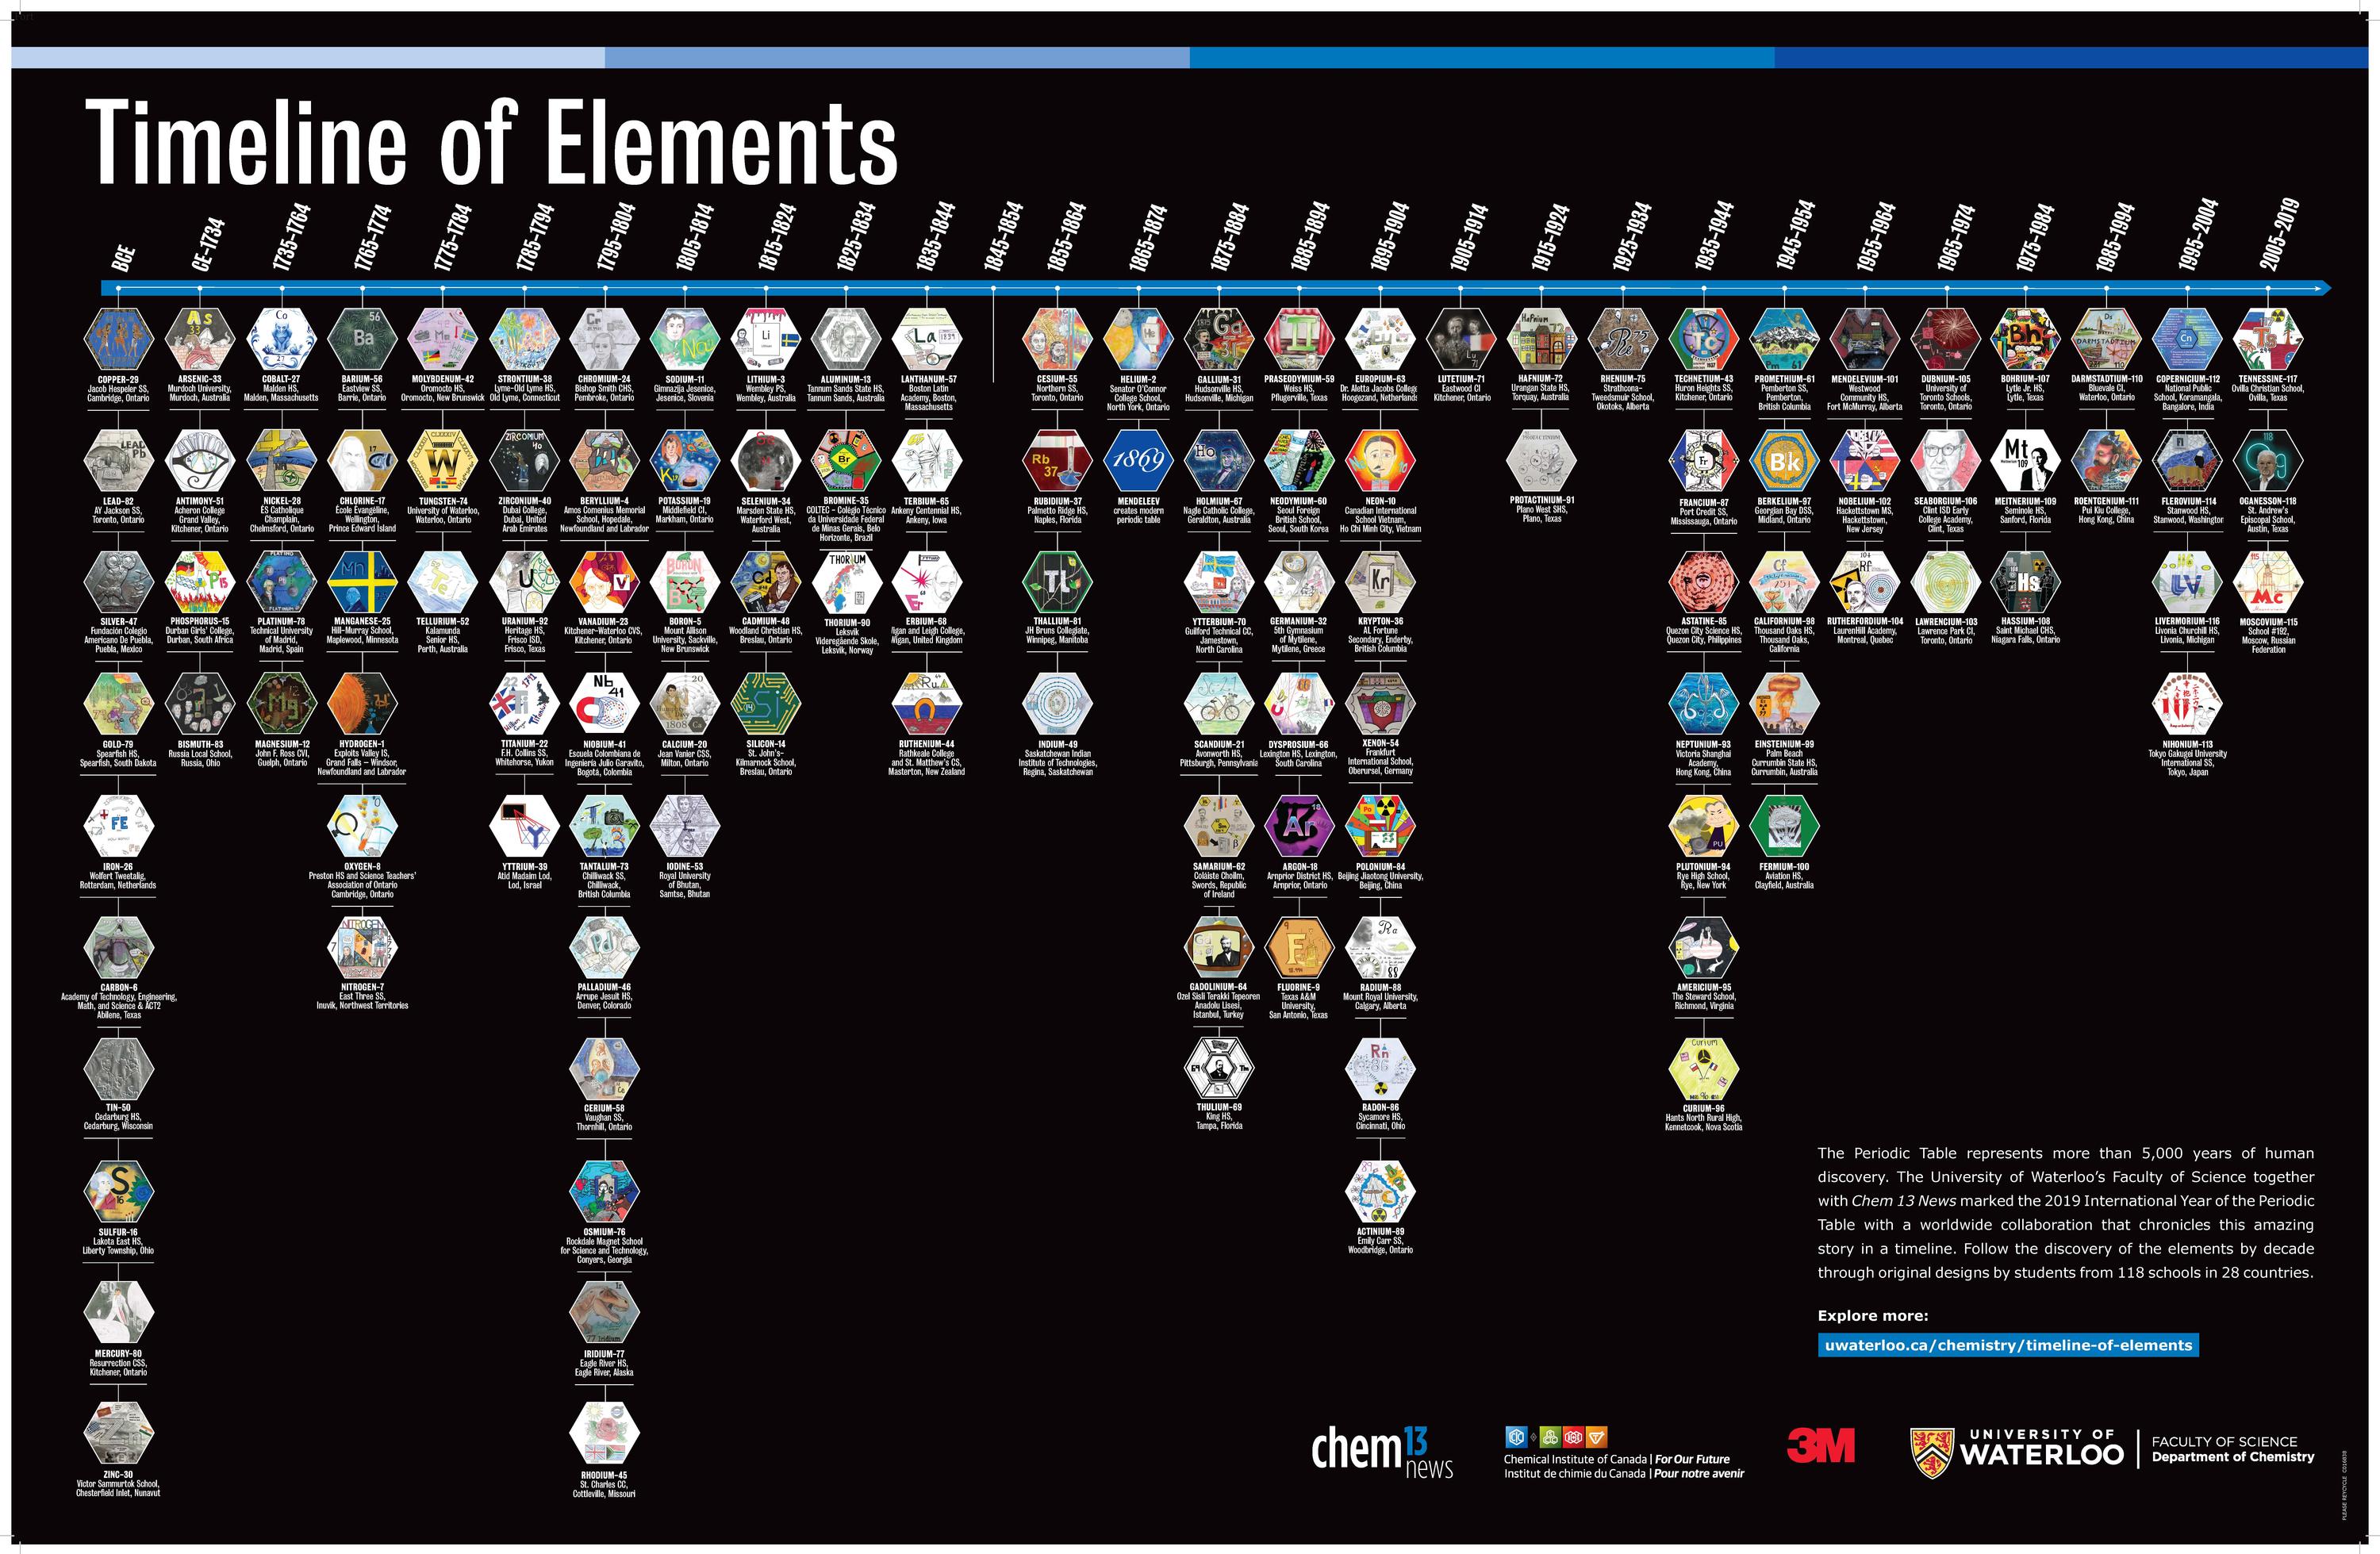 Timeline of Elements poster.